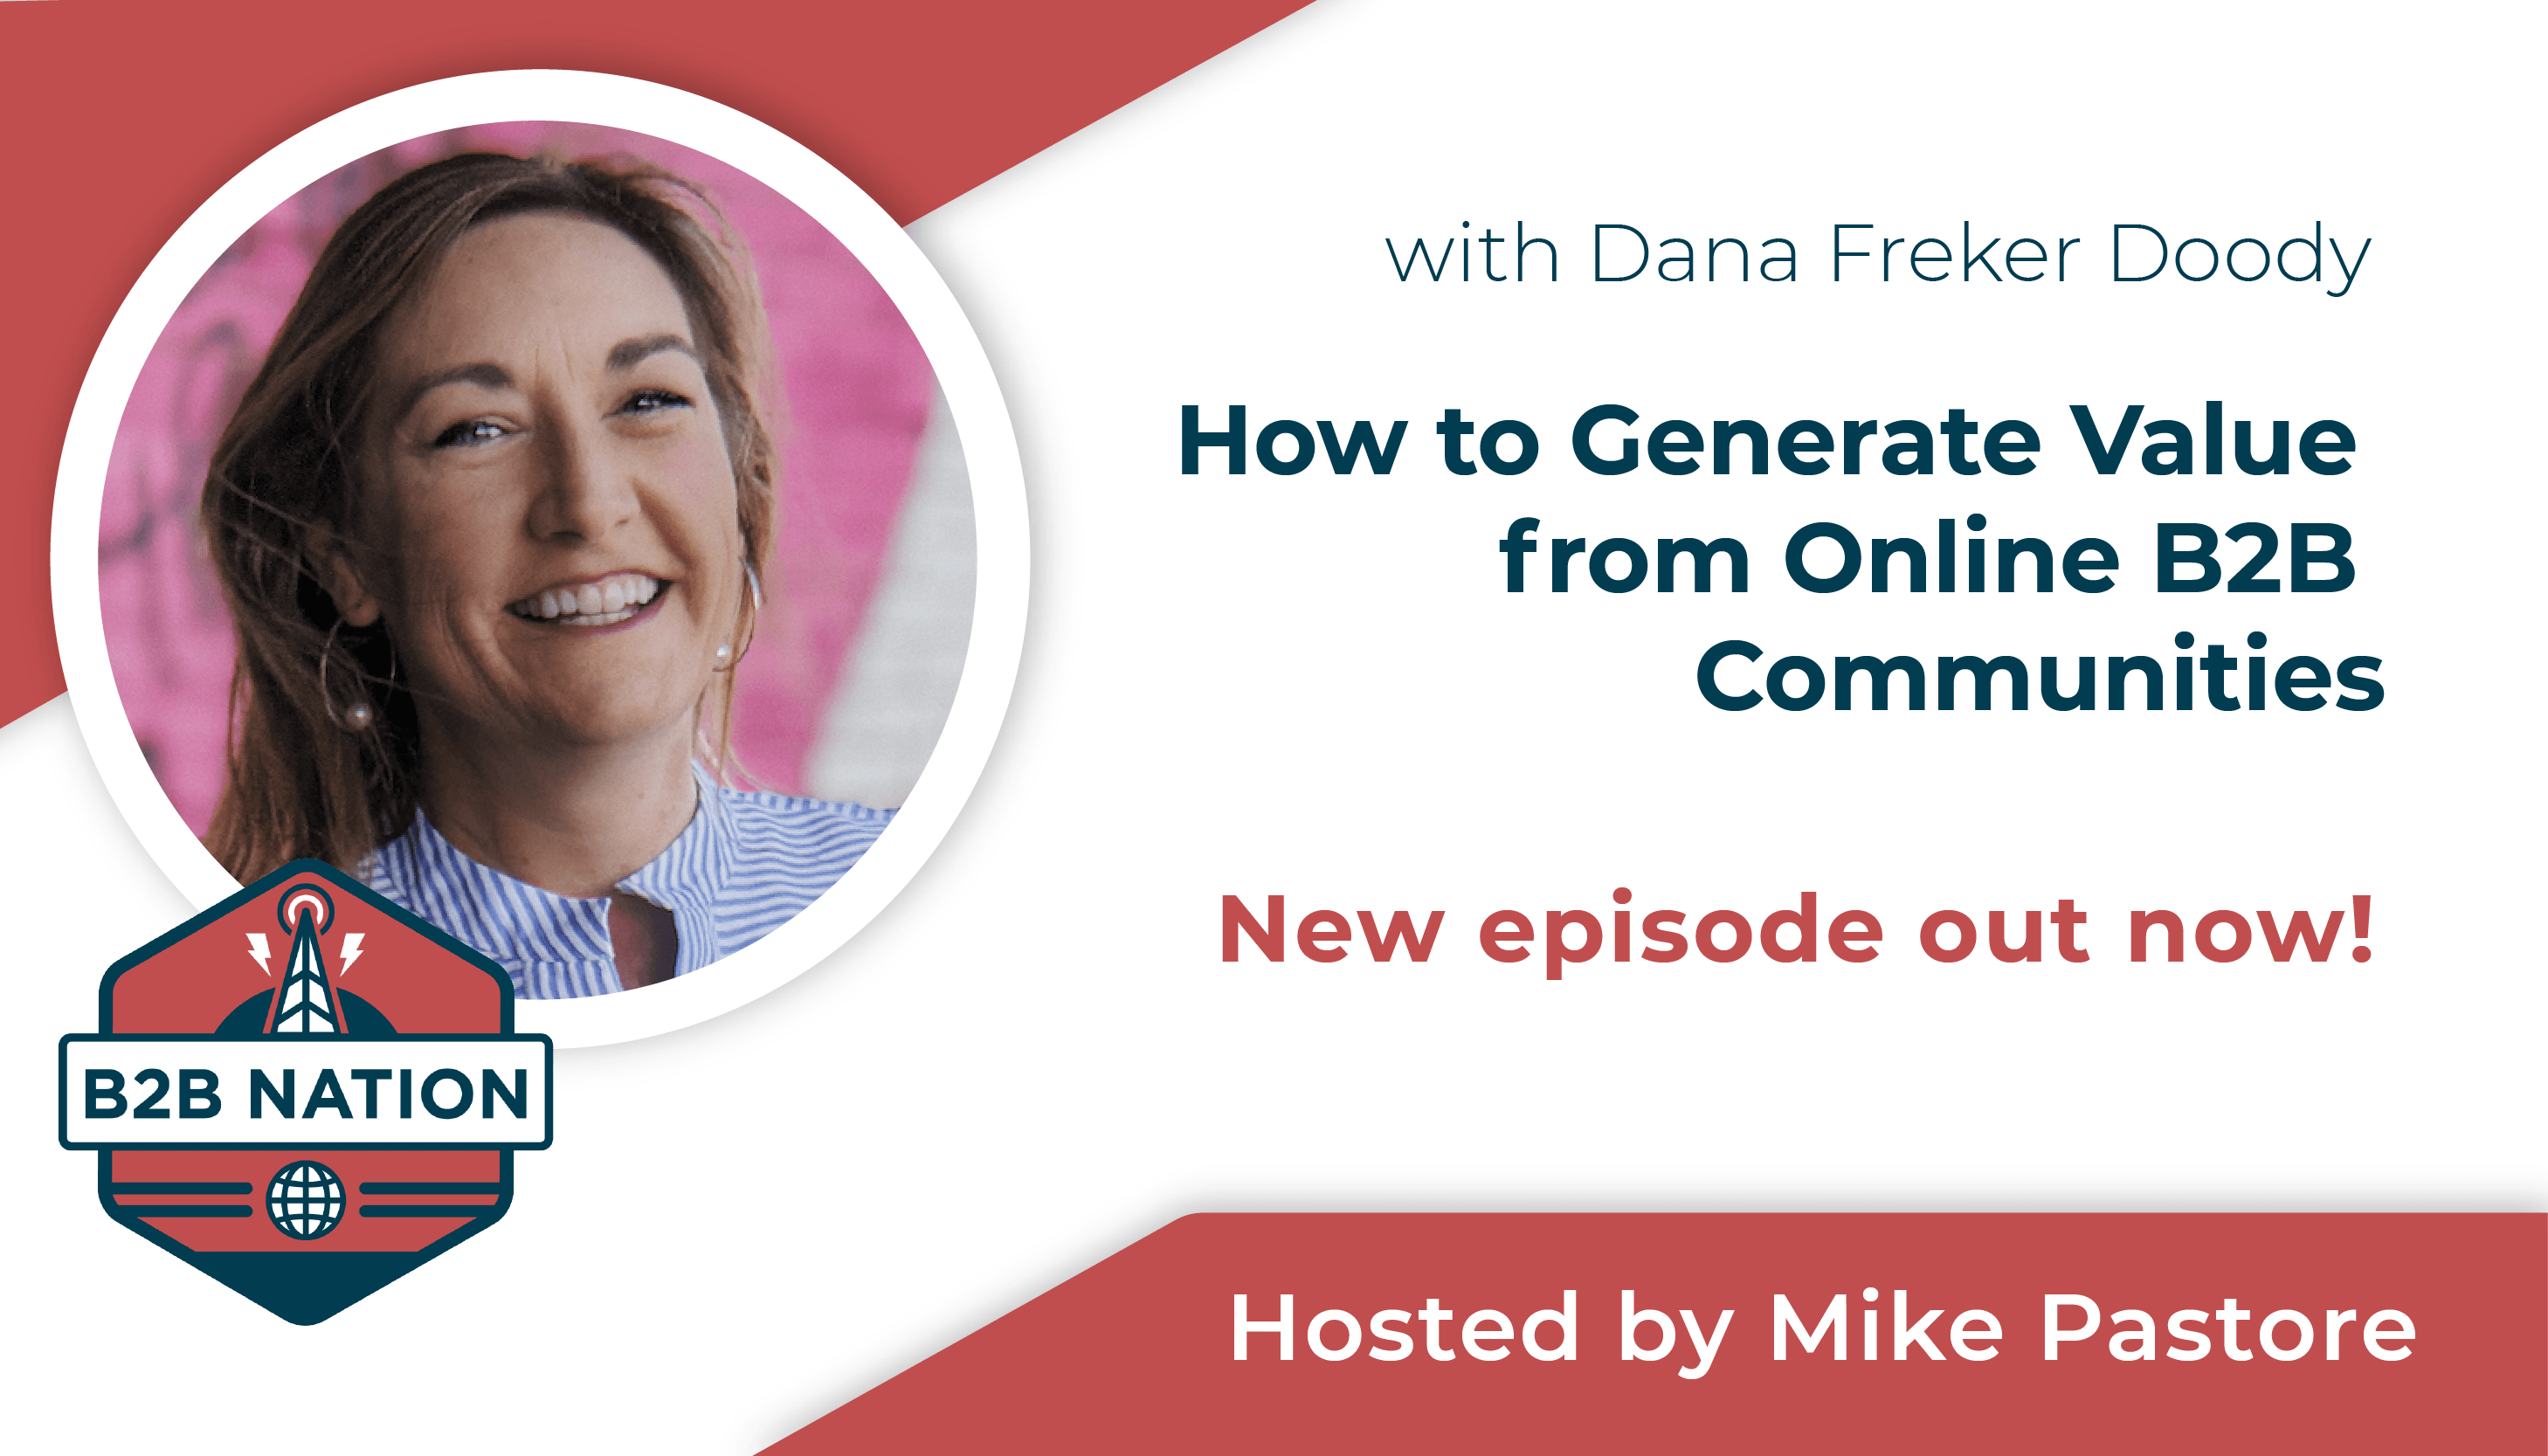 Dana Freker Doody discusses online communities for B2B.